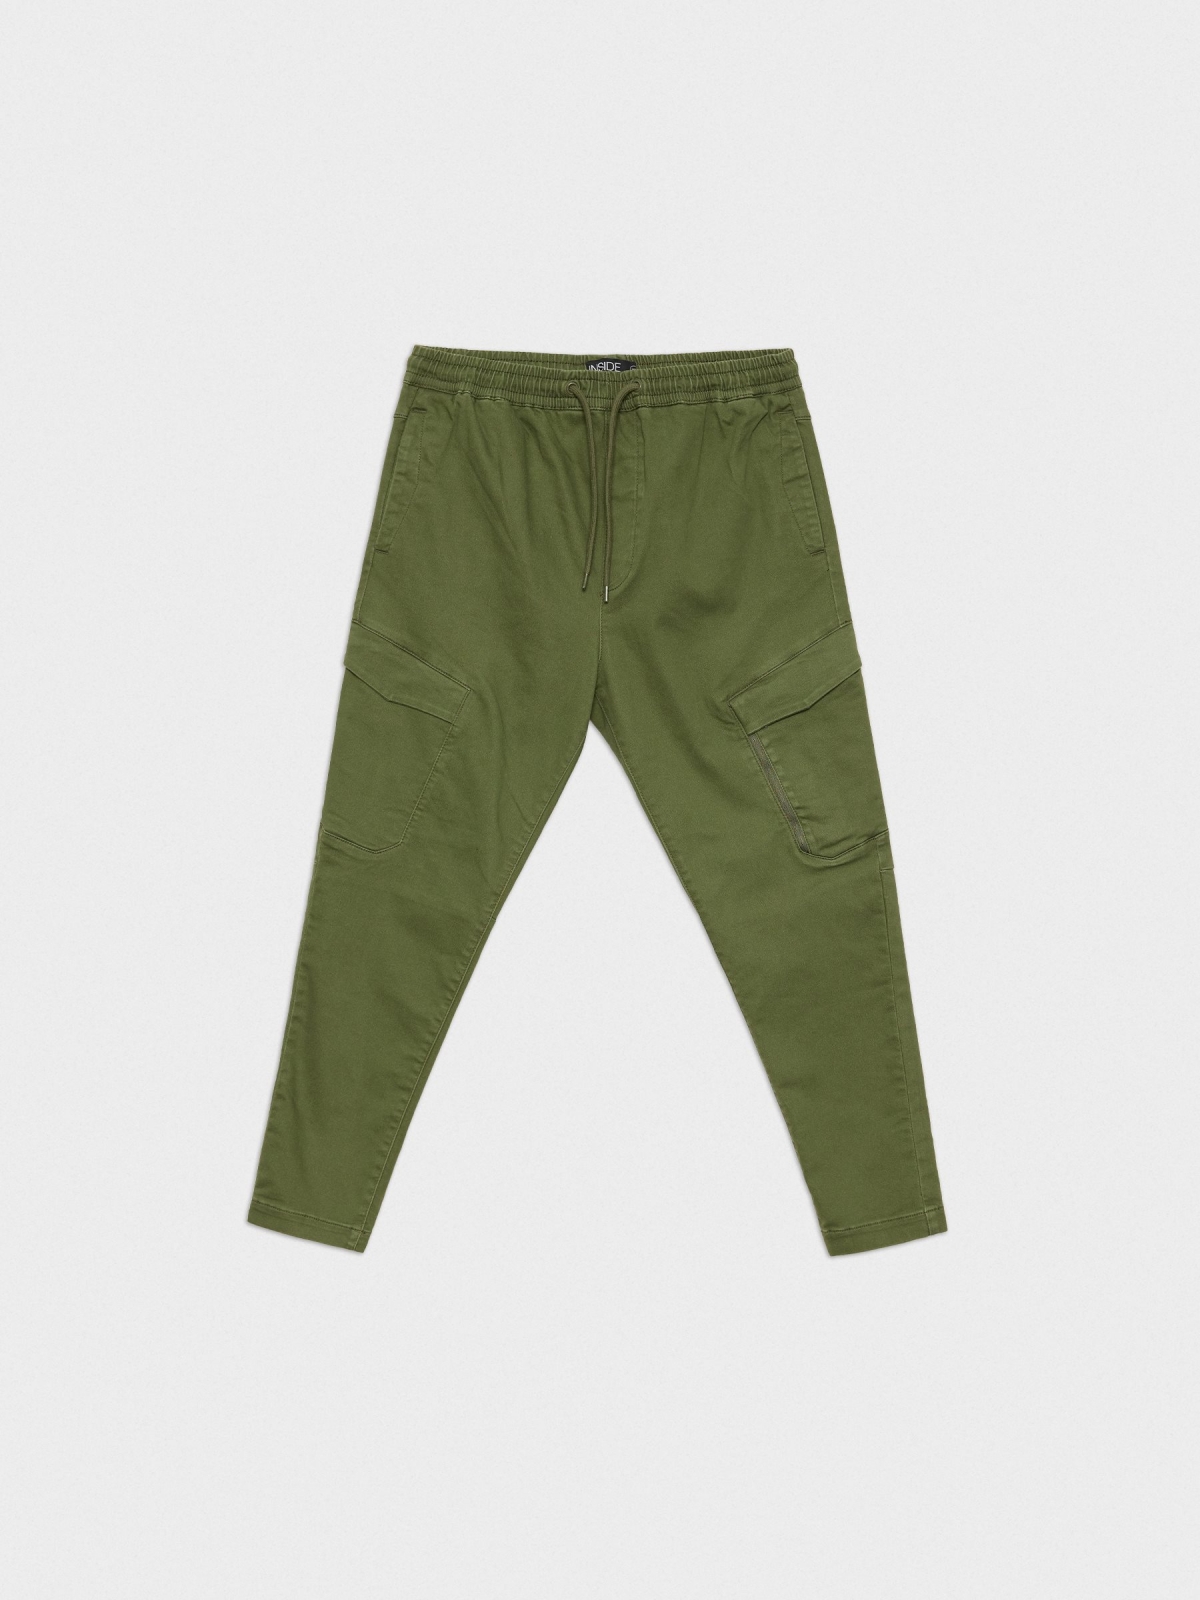  Men's cargo jogger pants green